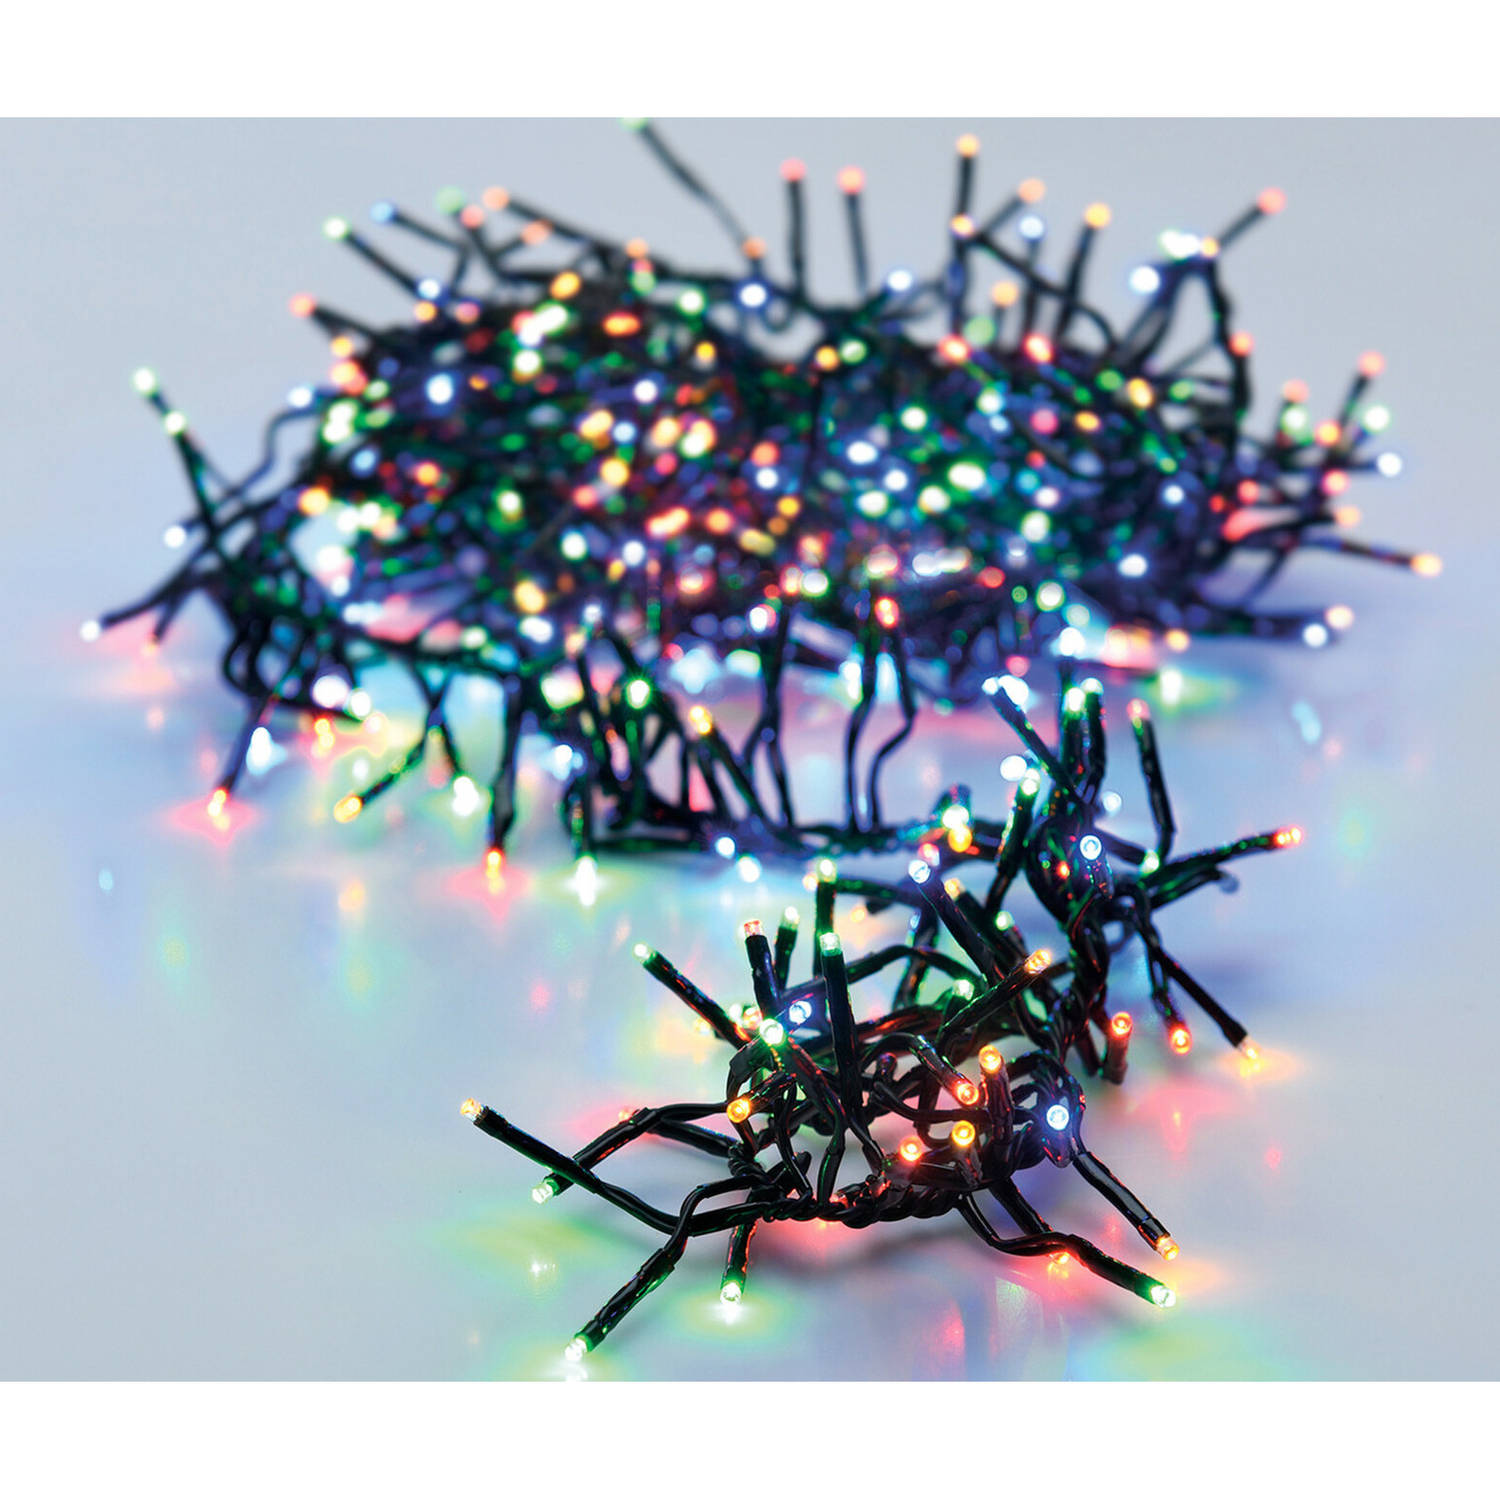 Christmas Decoration Cluster lichtsnoeren gekleurd-2x -140cm -192 leds Kerstverlichting kerstboom